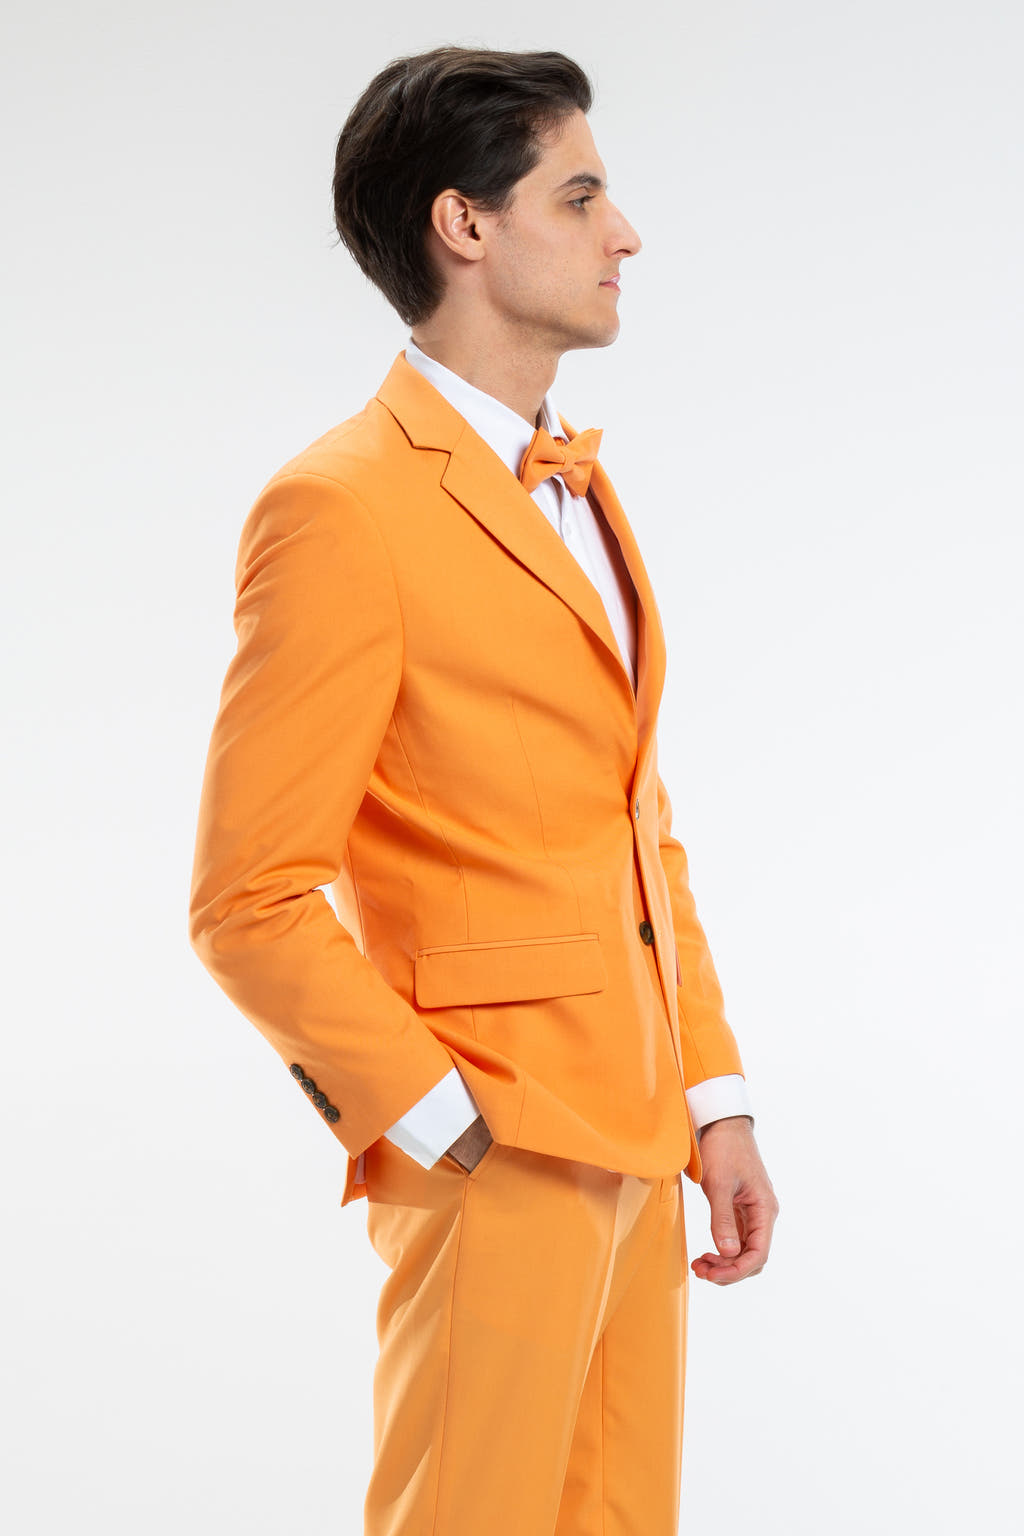 men's creamsicle orange pastel blazer